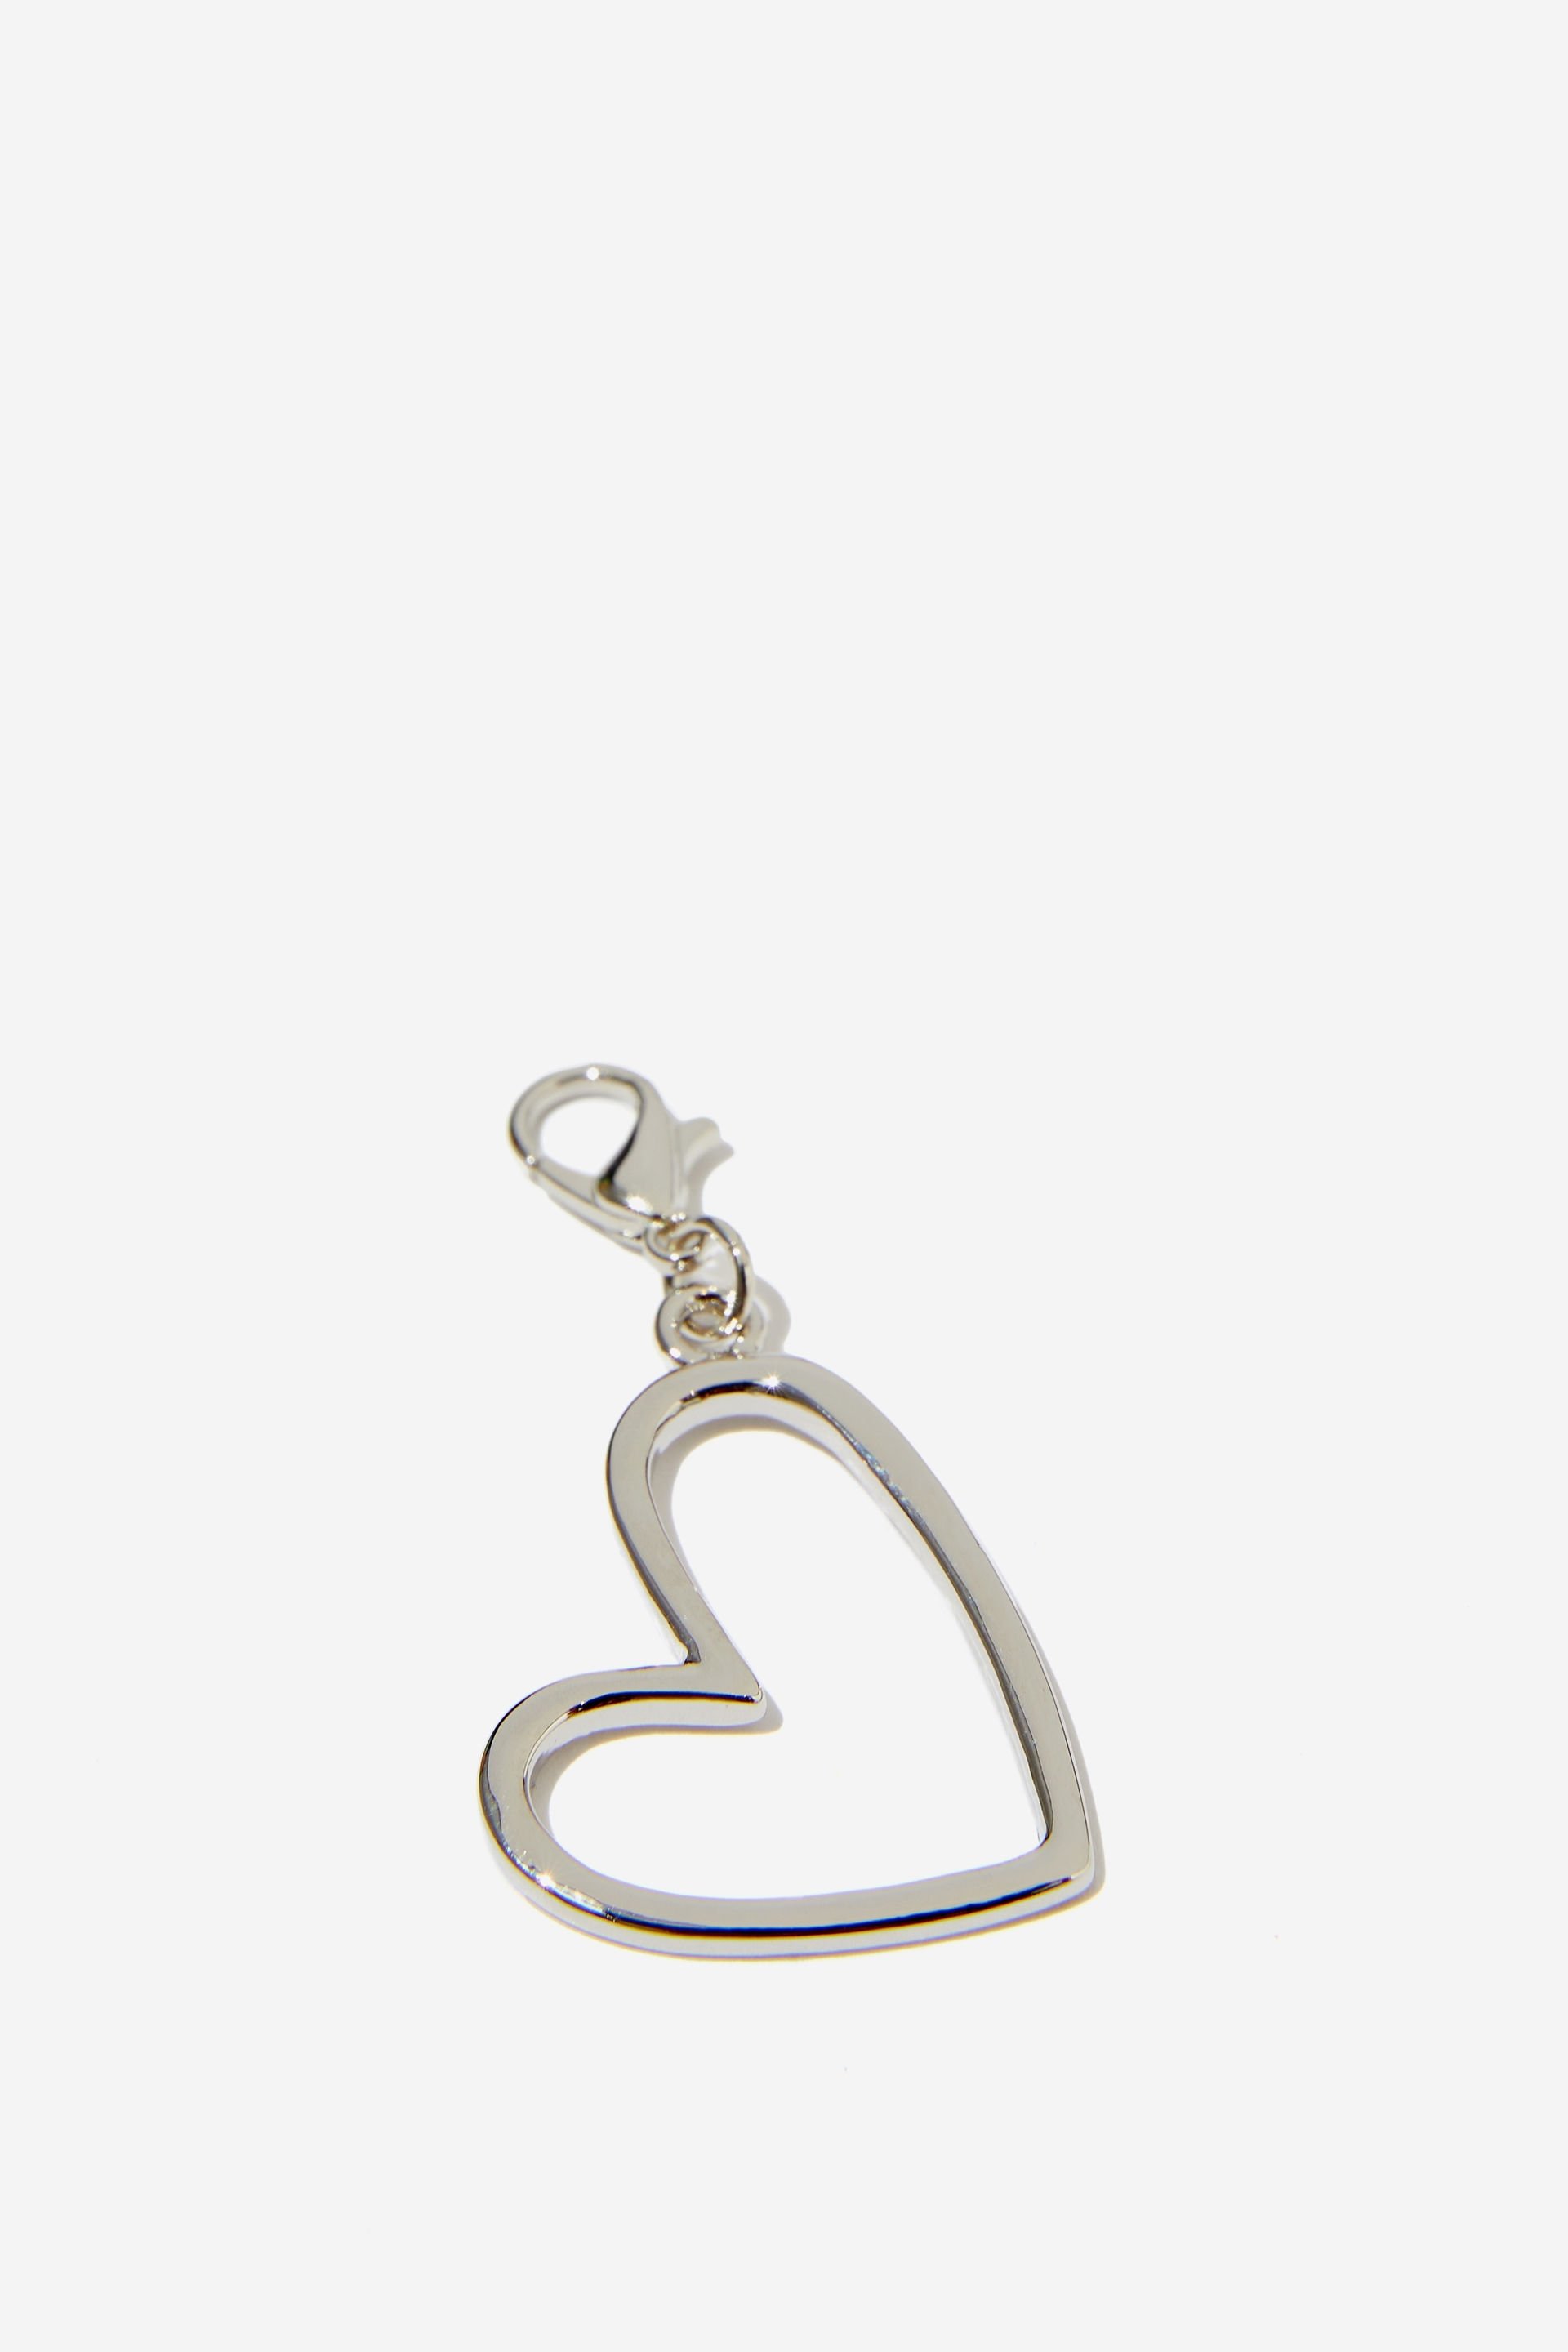 Typo - Icon Charm - Silver heart